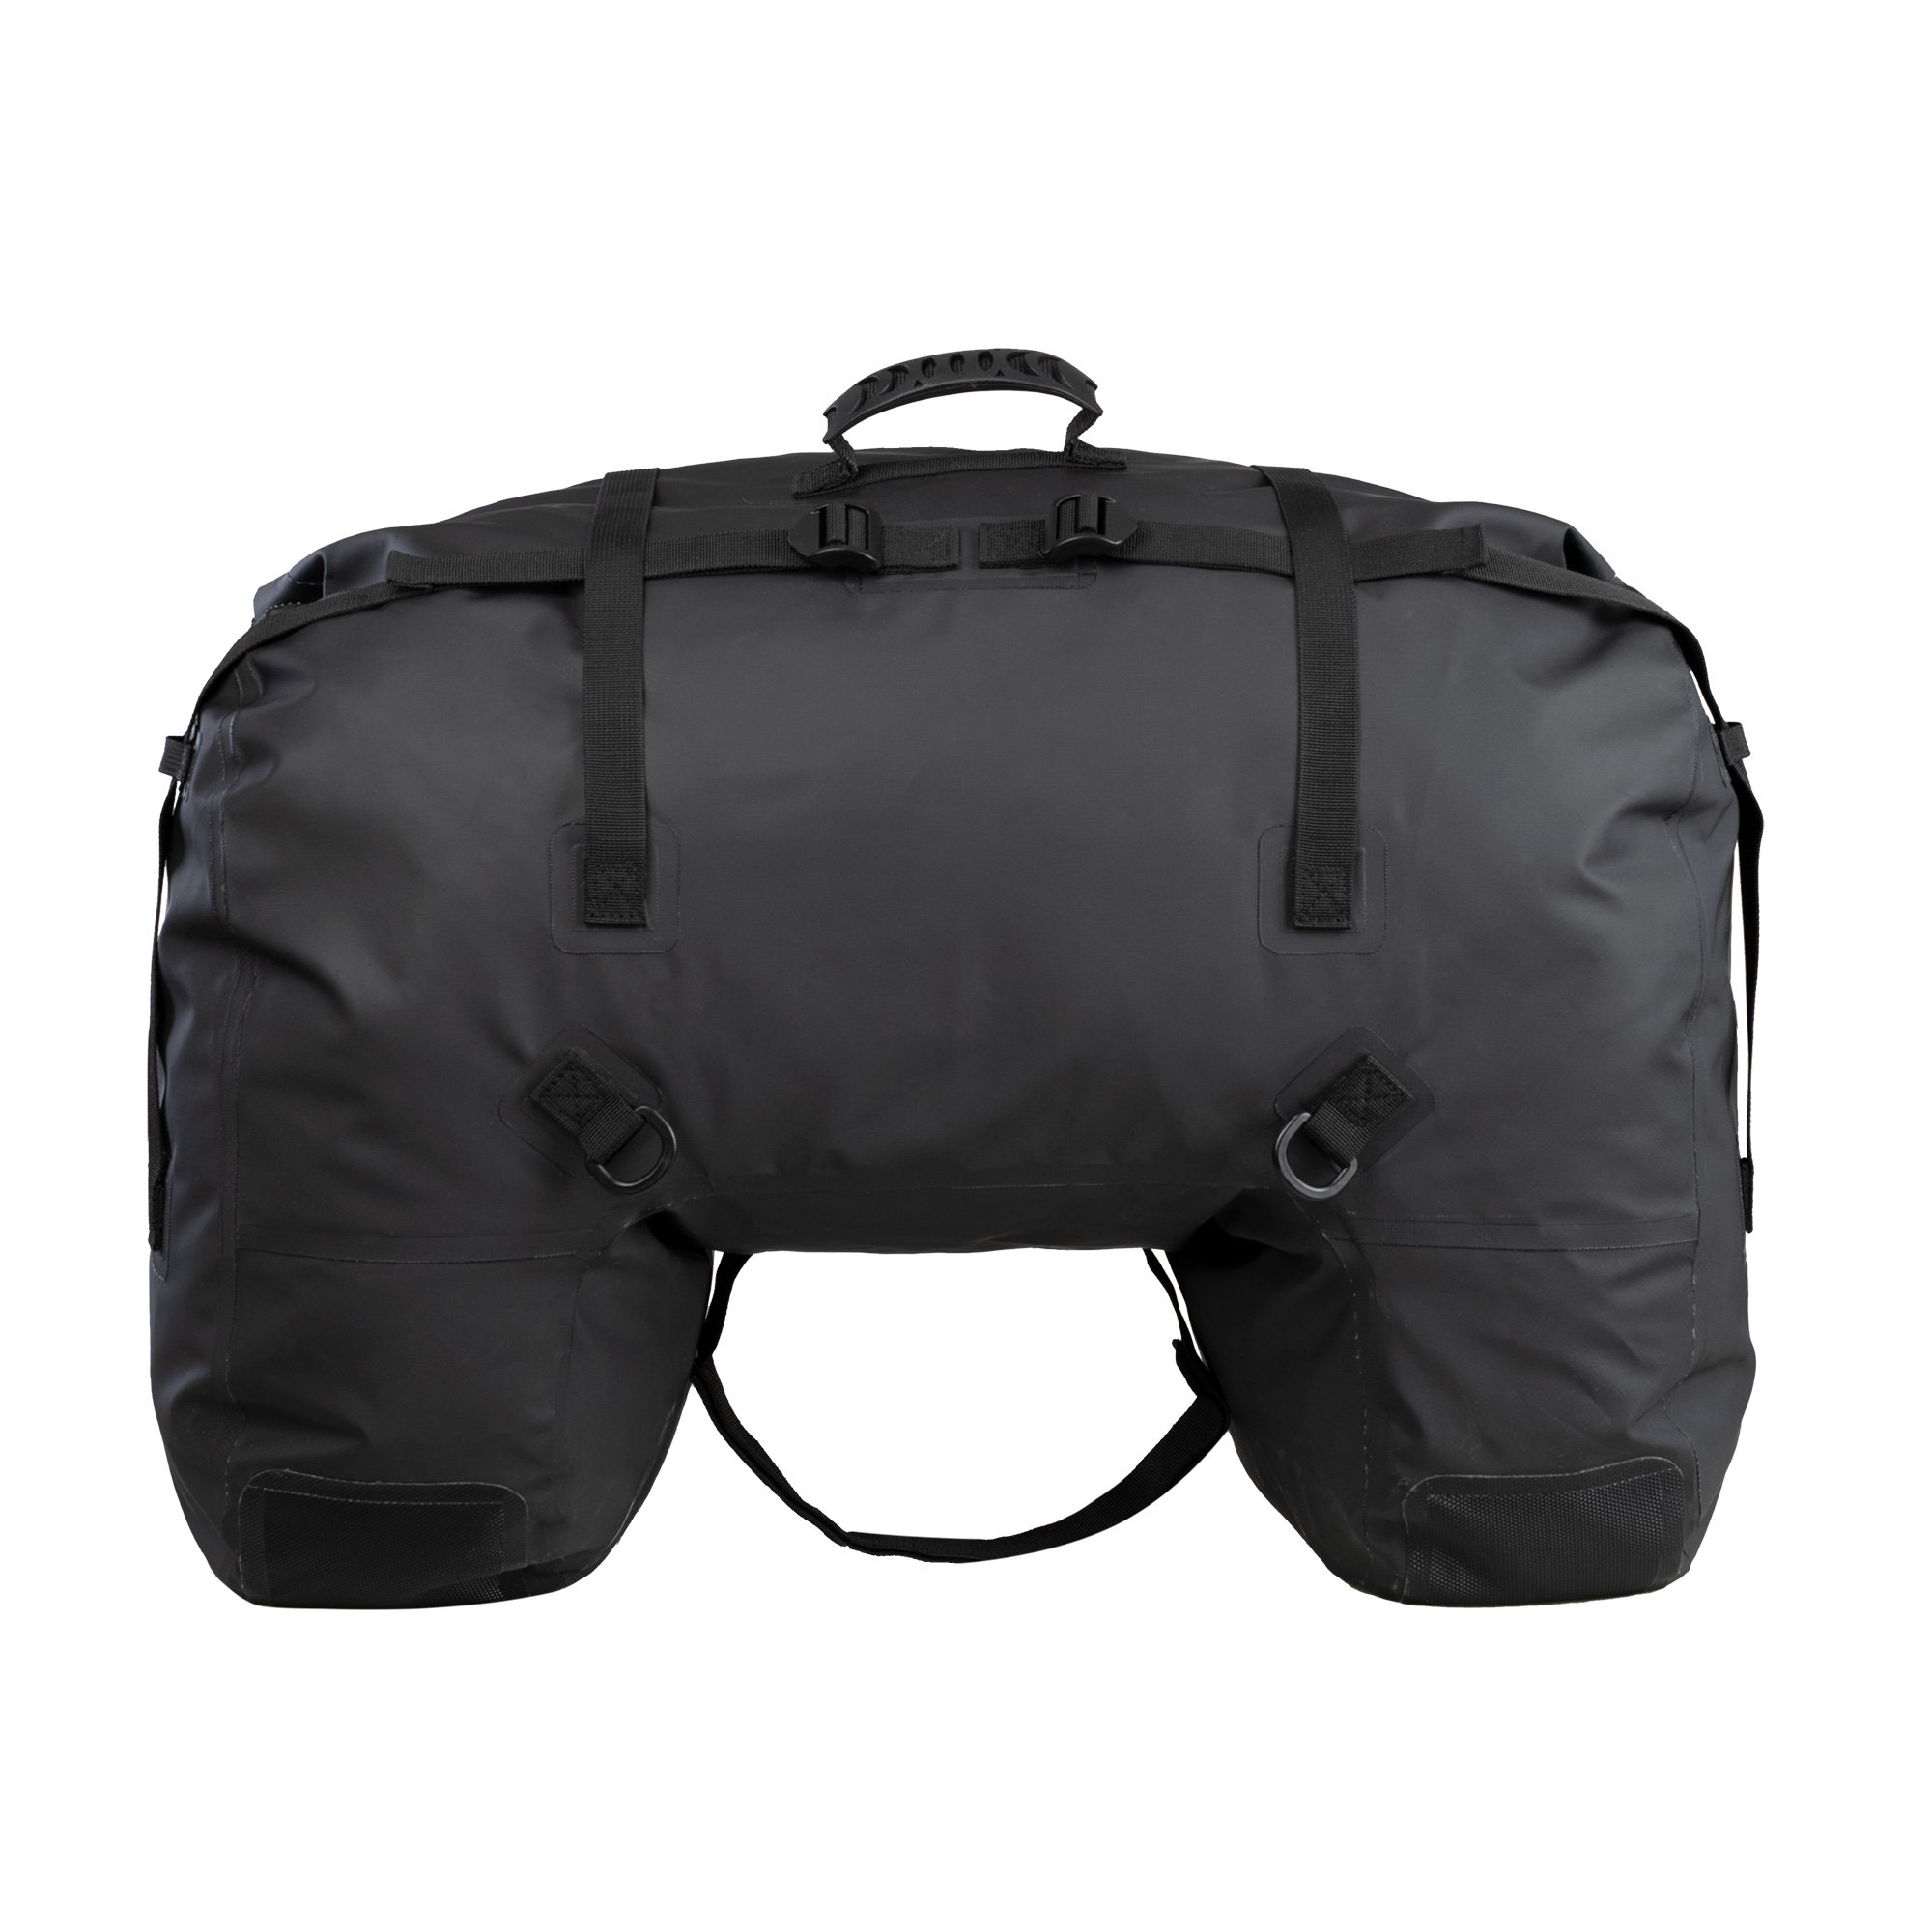 Super D Bag 20 – MNC Luggage Company